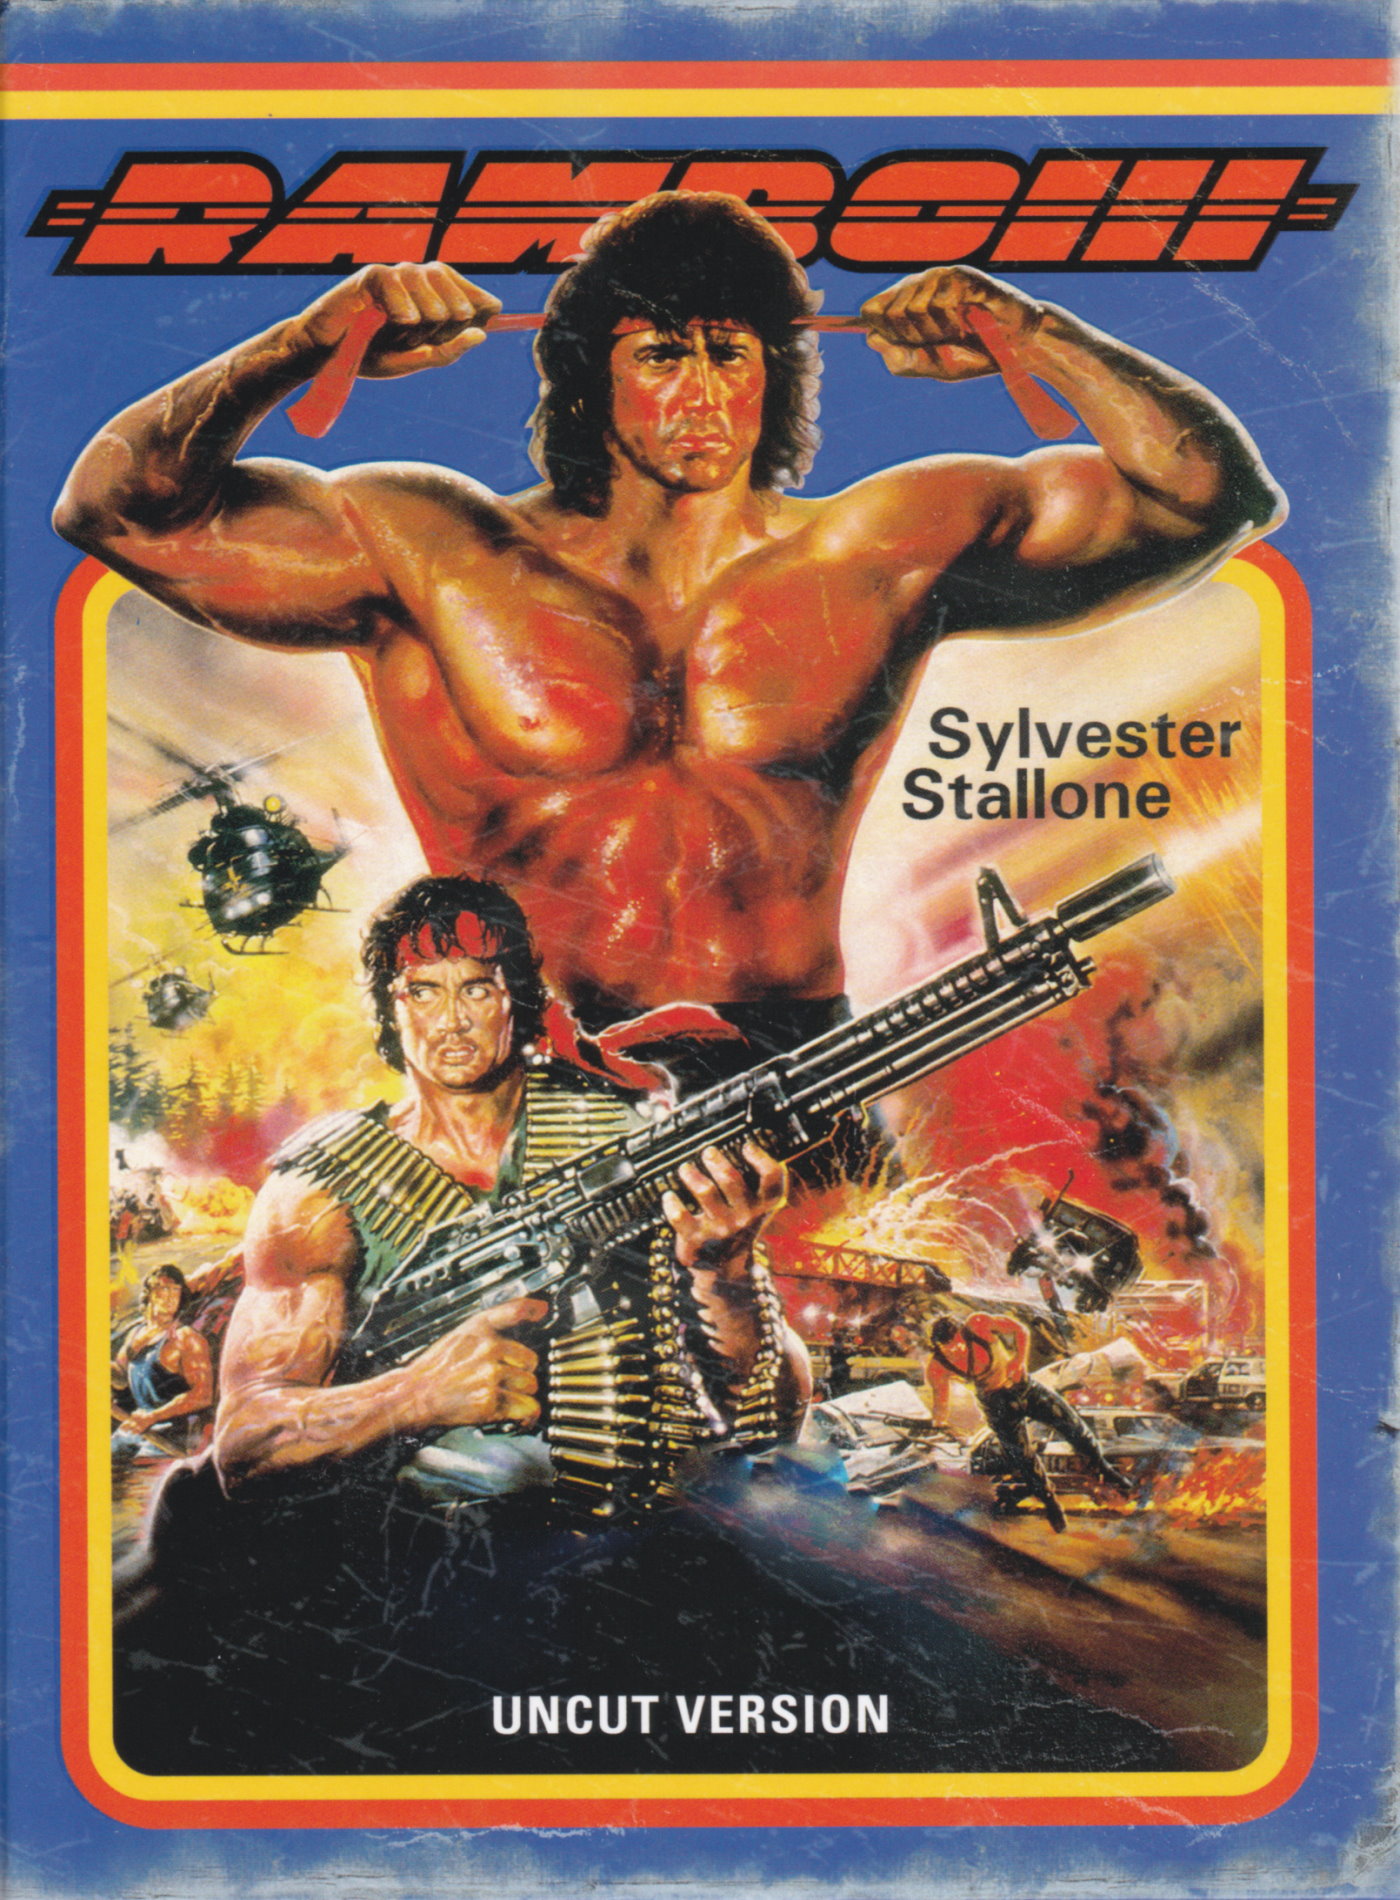 Cover - Rambo III.jpg